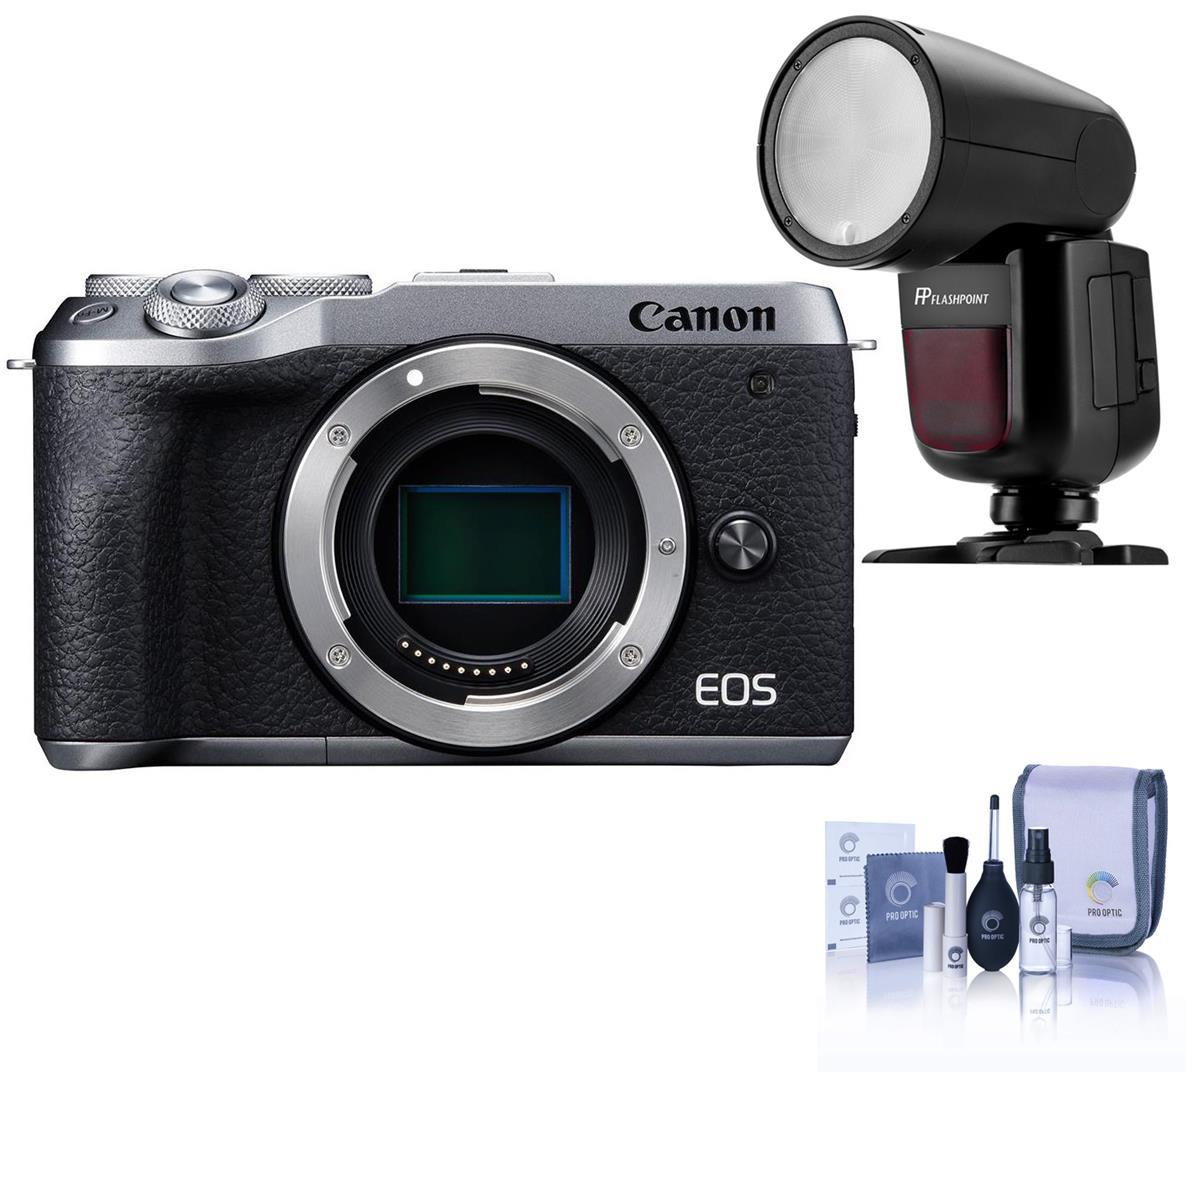 Image of Canon EOS M6 Mark II Mirrorless Digital Camera Body Silver W/FP Zoom Li-on Flash